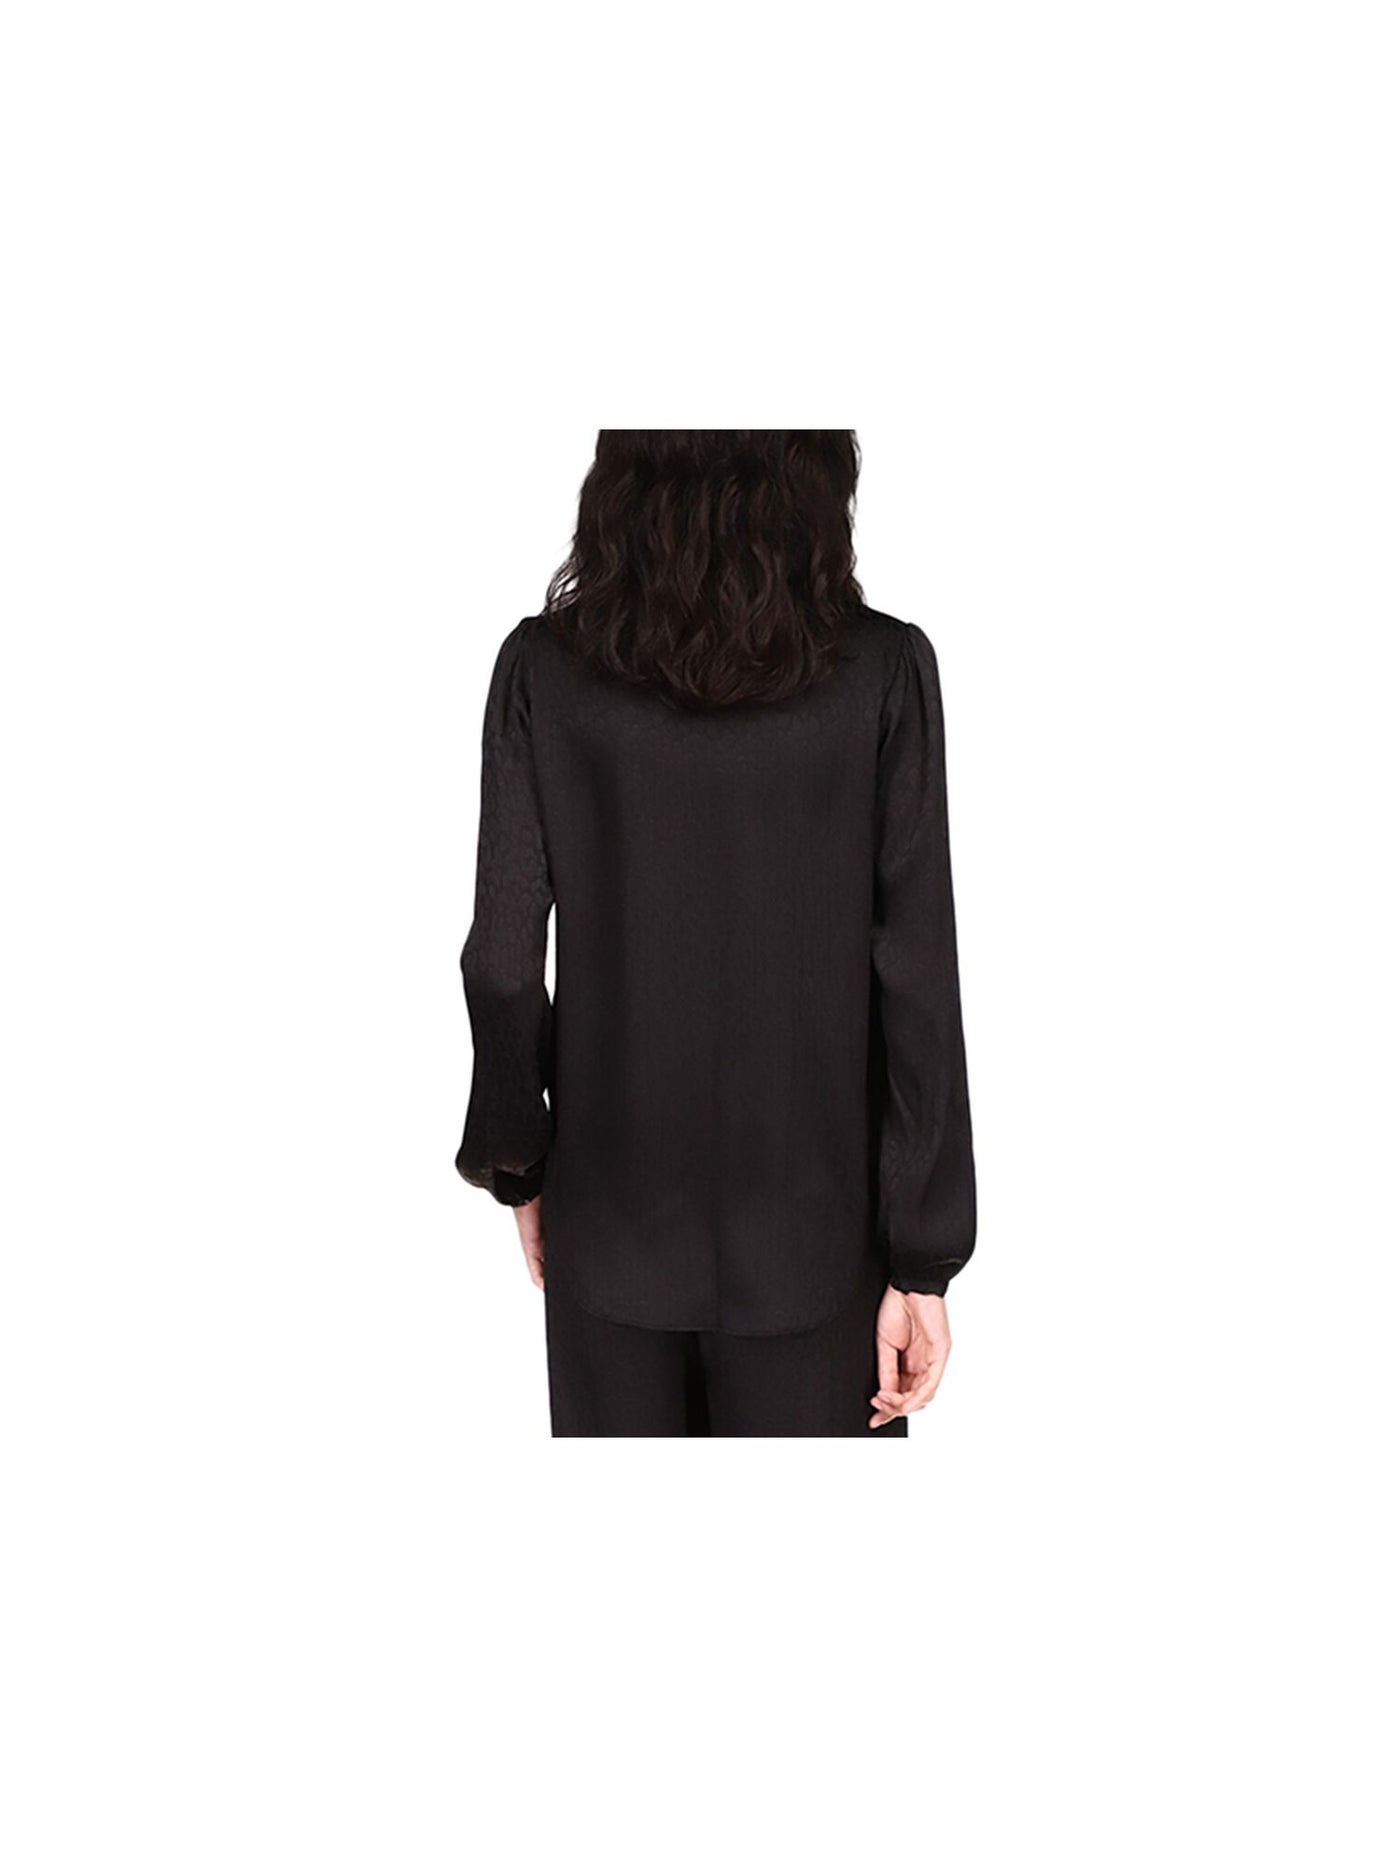 MICHAEL MICHAEL KORS Womens Black Sheer Rounded Hem Keyhole Cuffs Animal Print Long Sleeve V Neck Top S